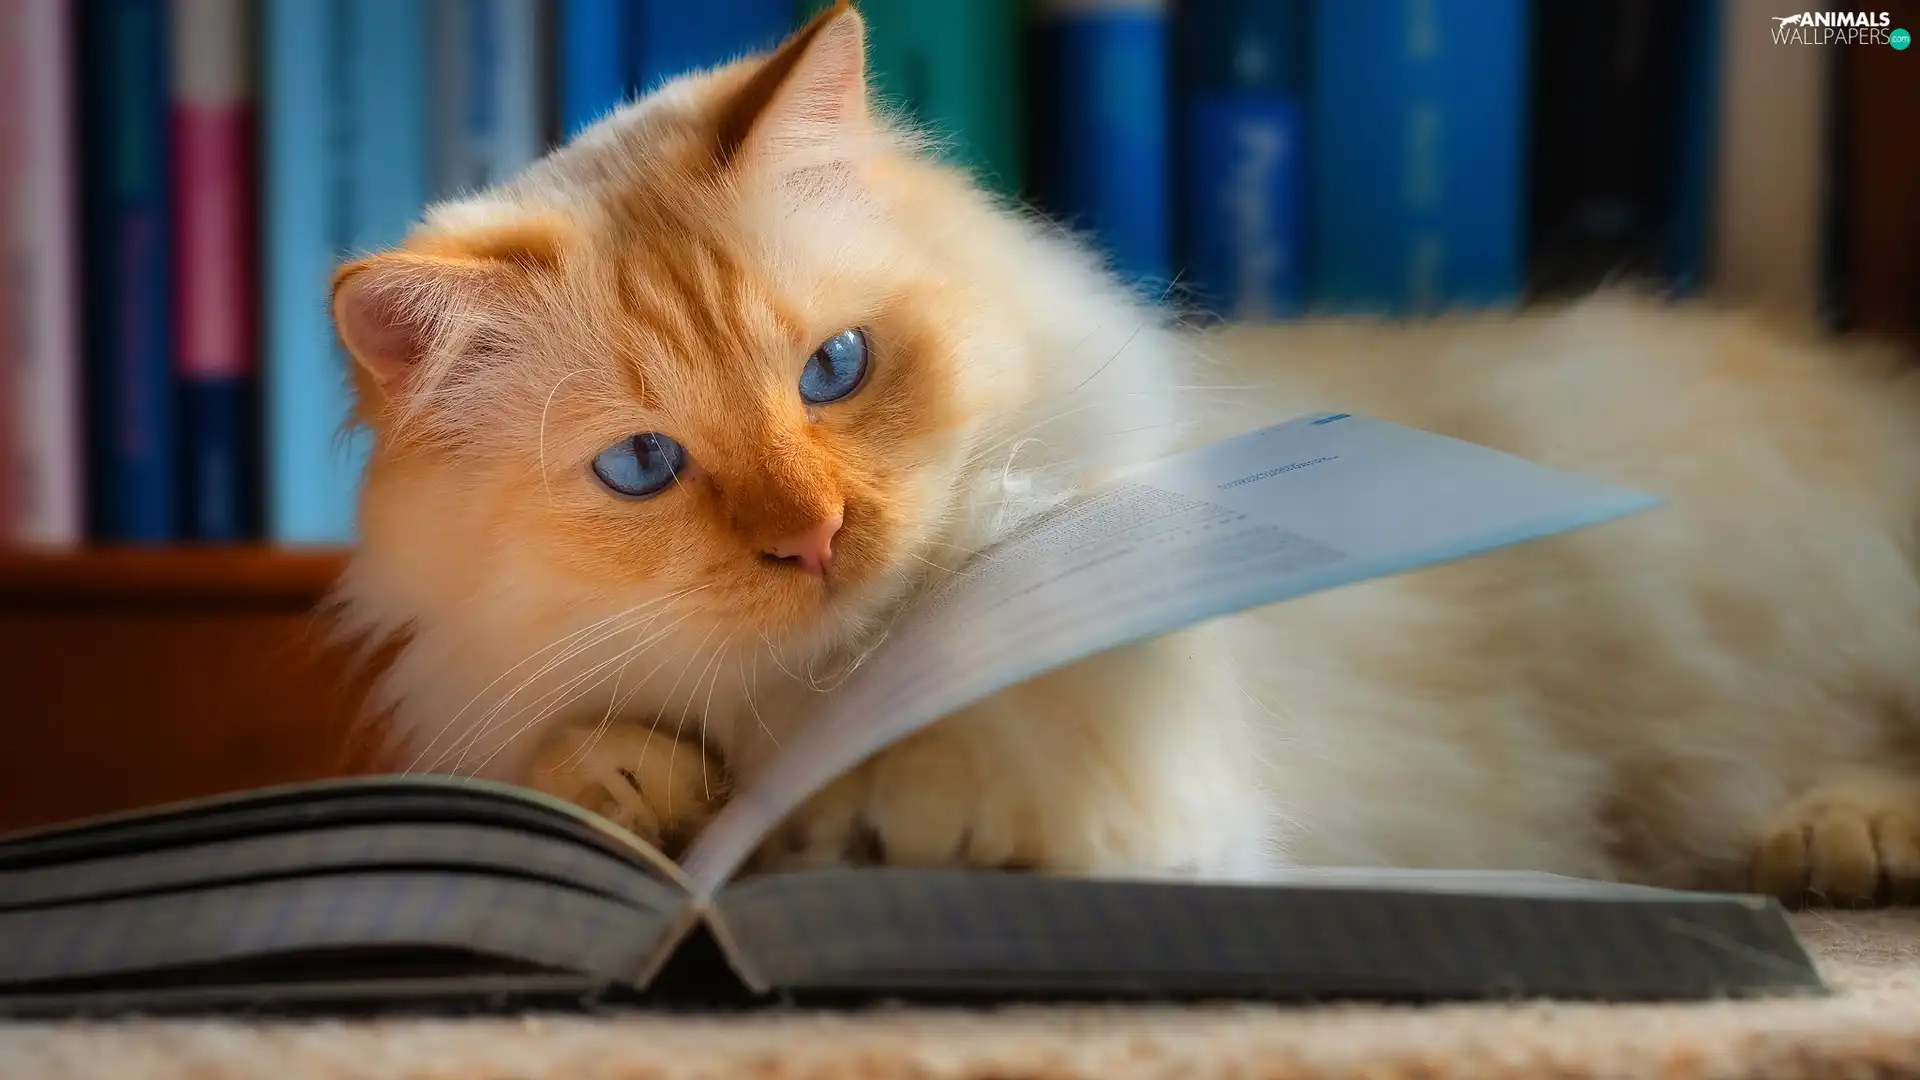 Blue Eyed, cat, Book, Reddish